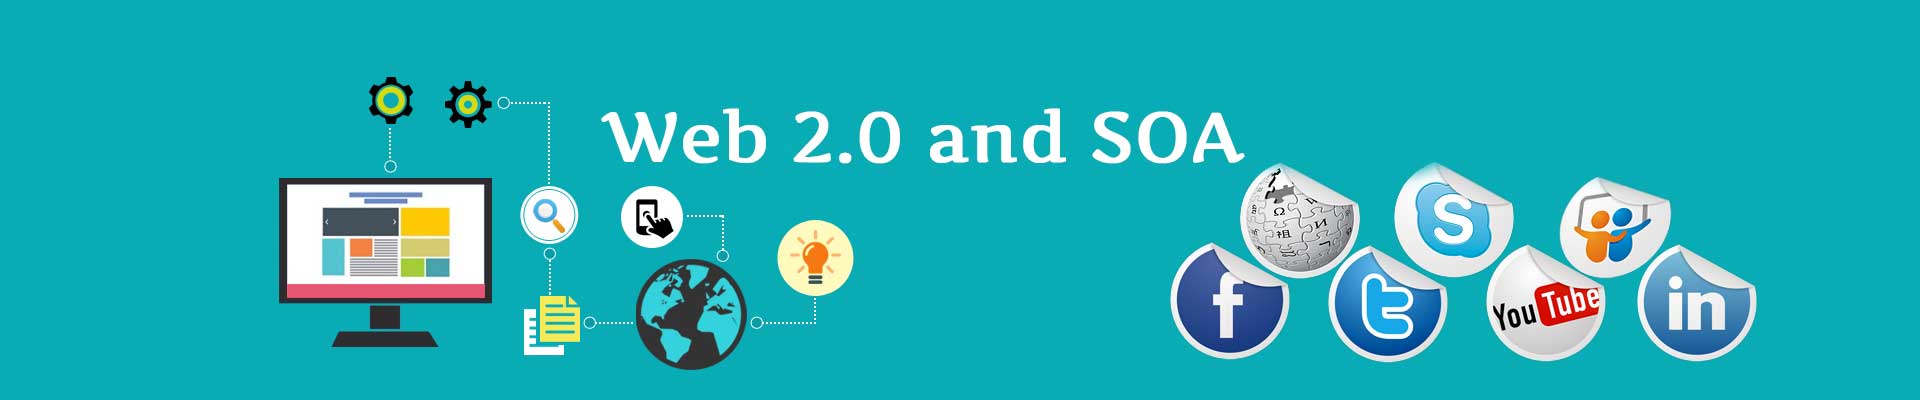 Web 2.0 and SOA